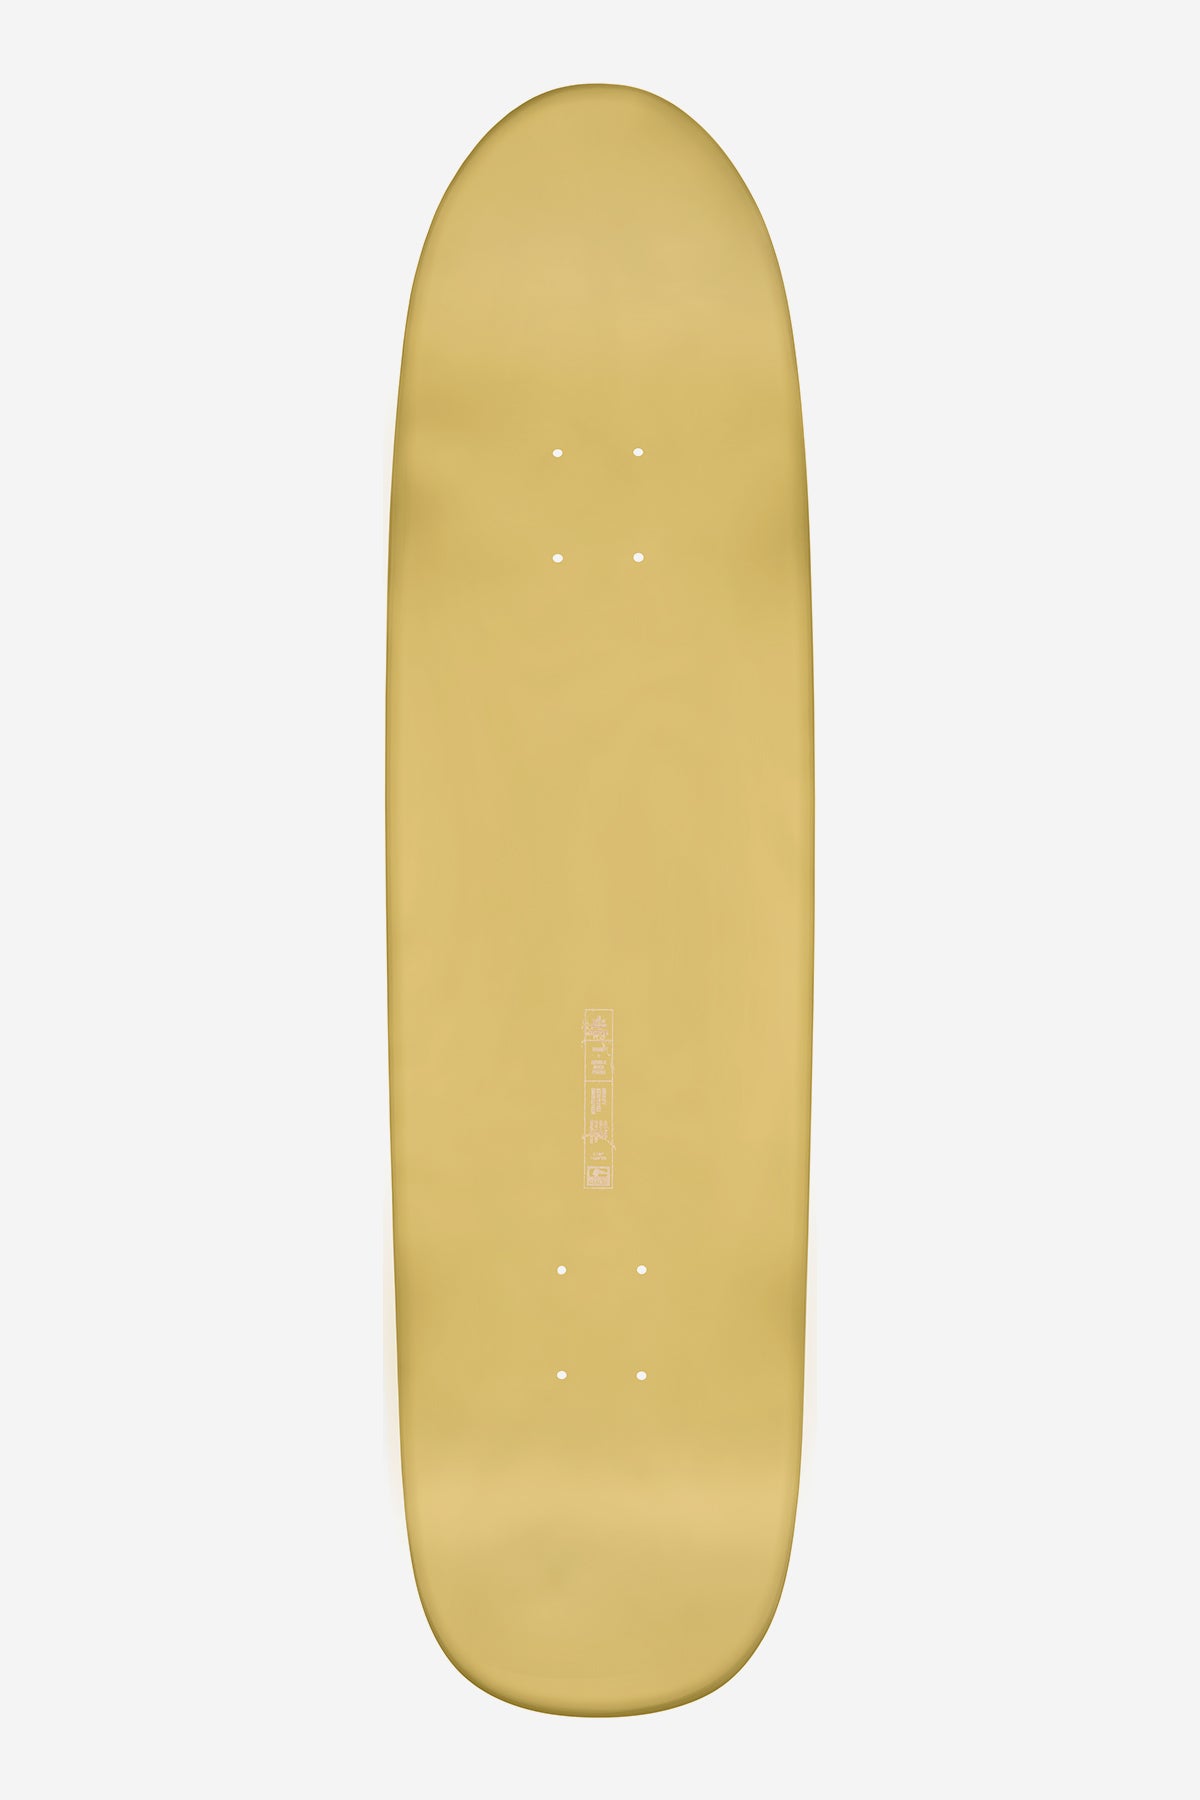 Globe - Shooter - Yellow/Comehell - 8,625" Skateboard Deck